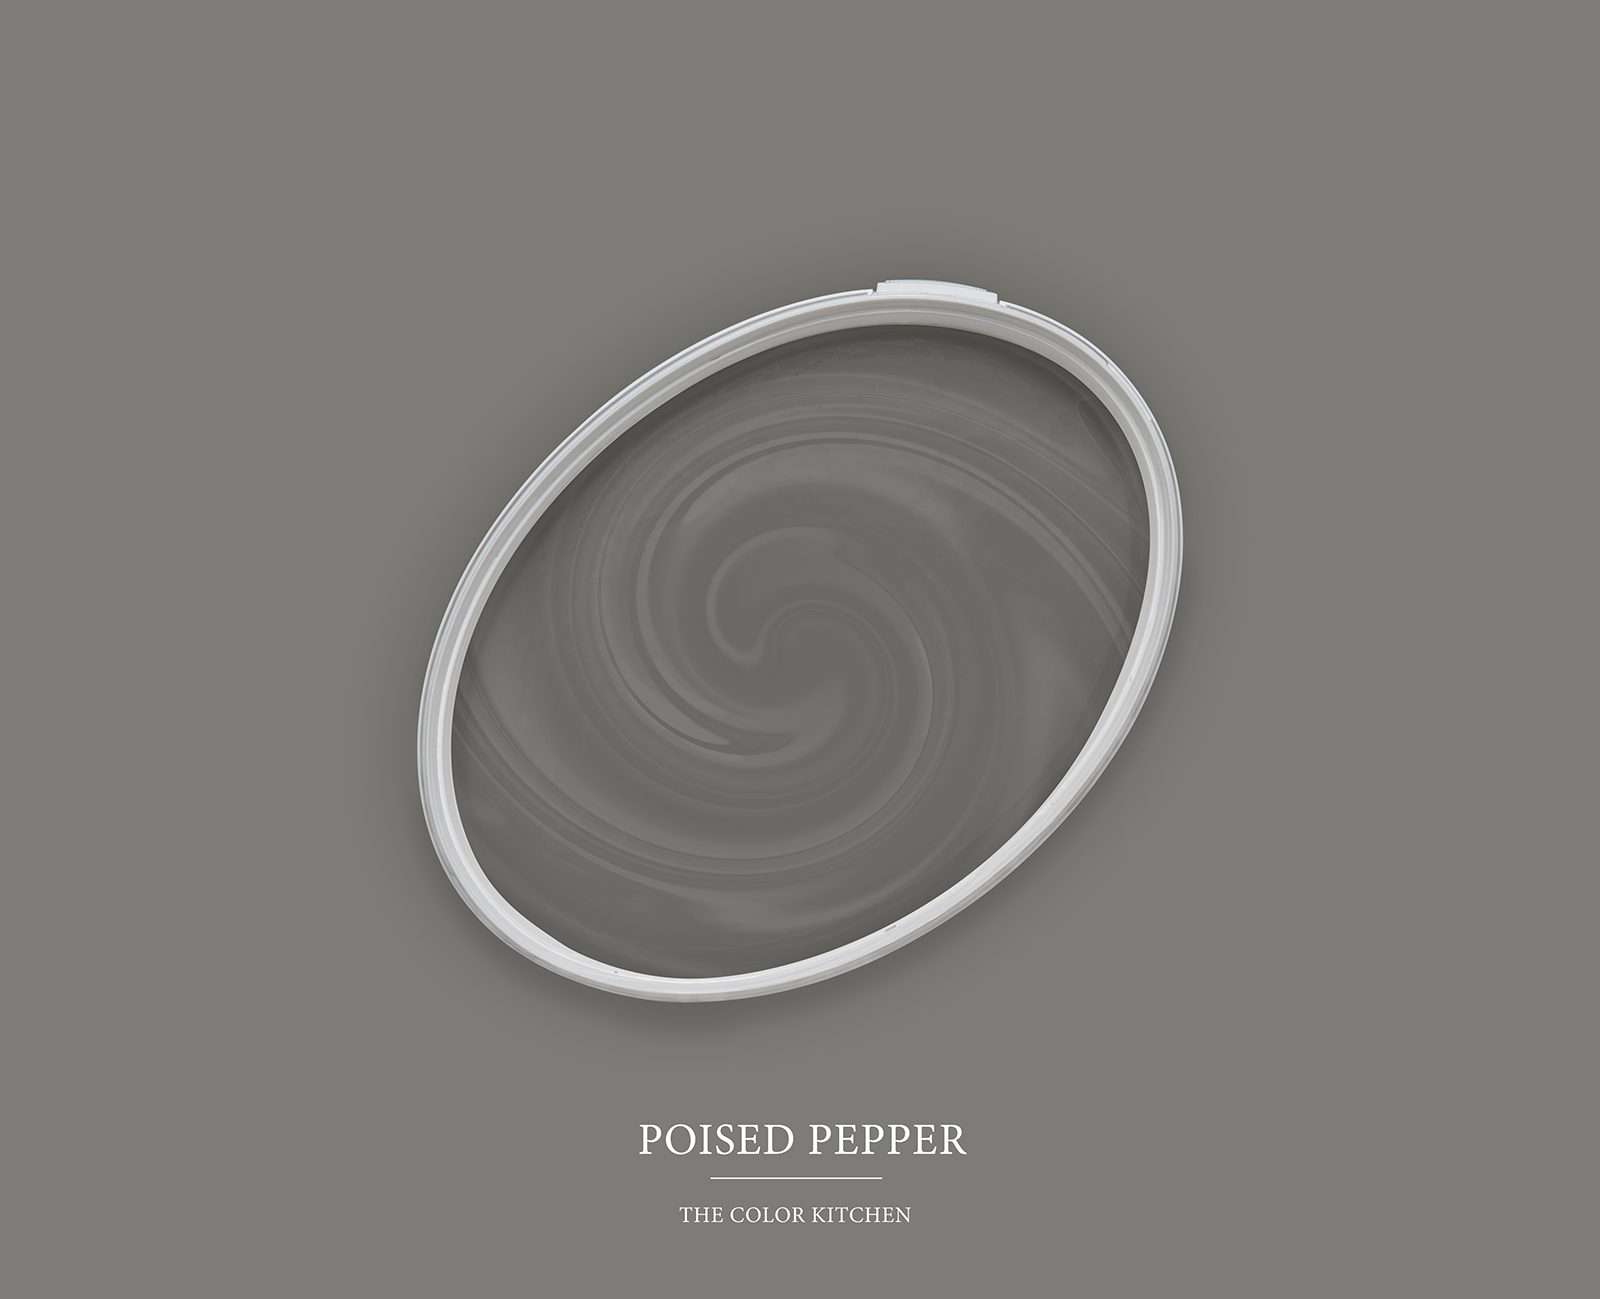         Wall Paint TCK1013 »Poised Pepper« in dark grey – 2.5 litre
    